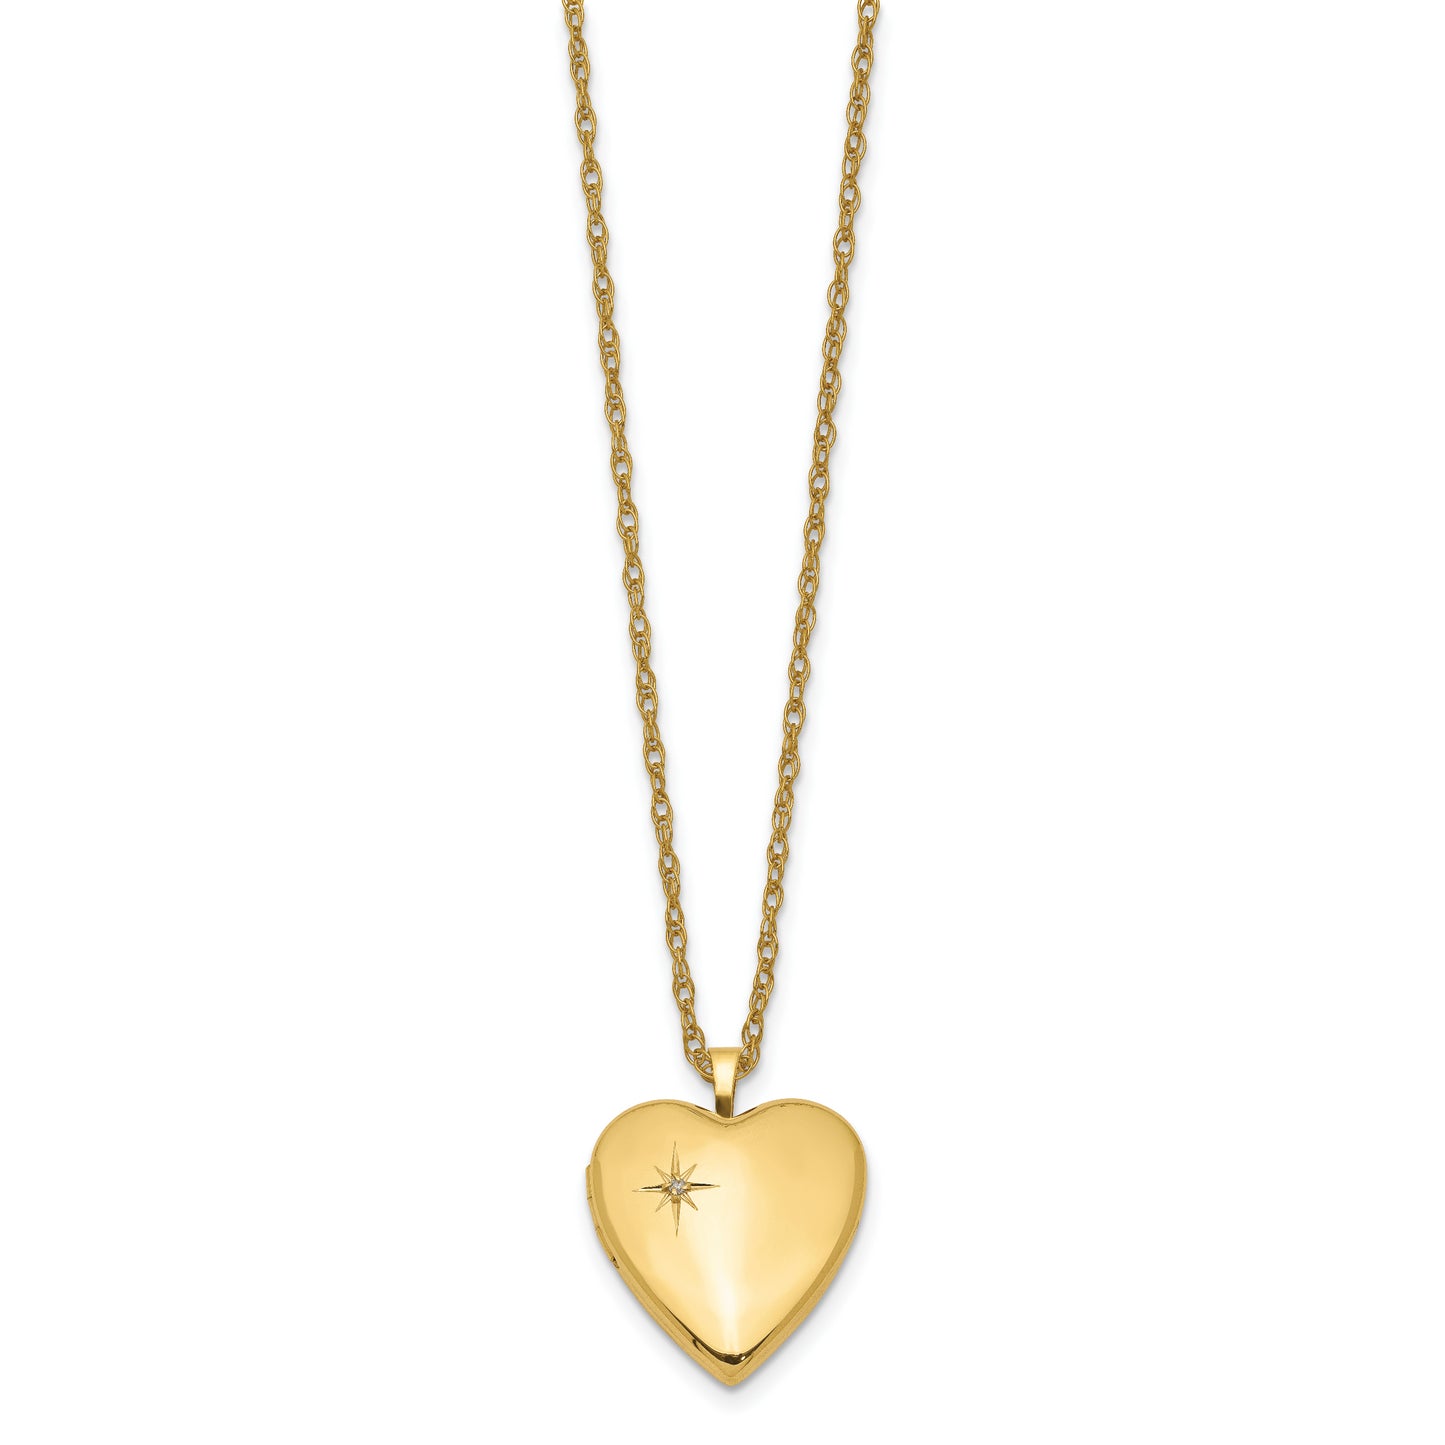 1/20 Gold Filled 20mm Polished/Satin Diamond Star Heart Locket Necklace